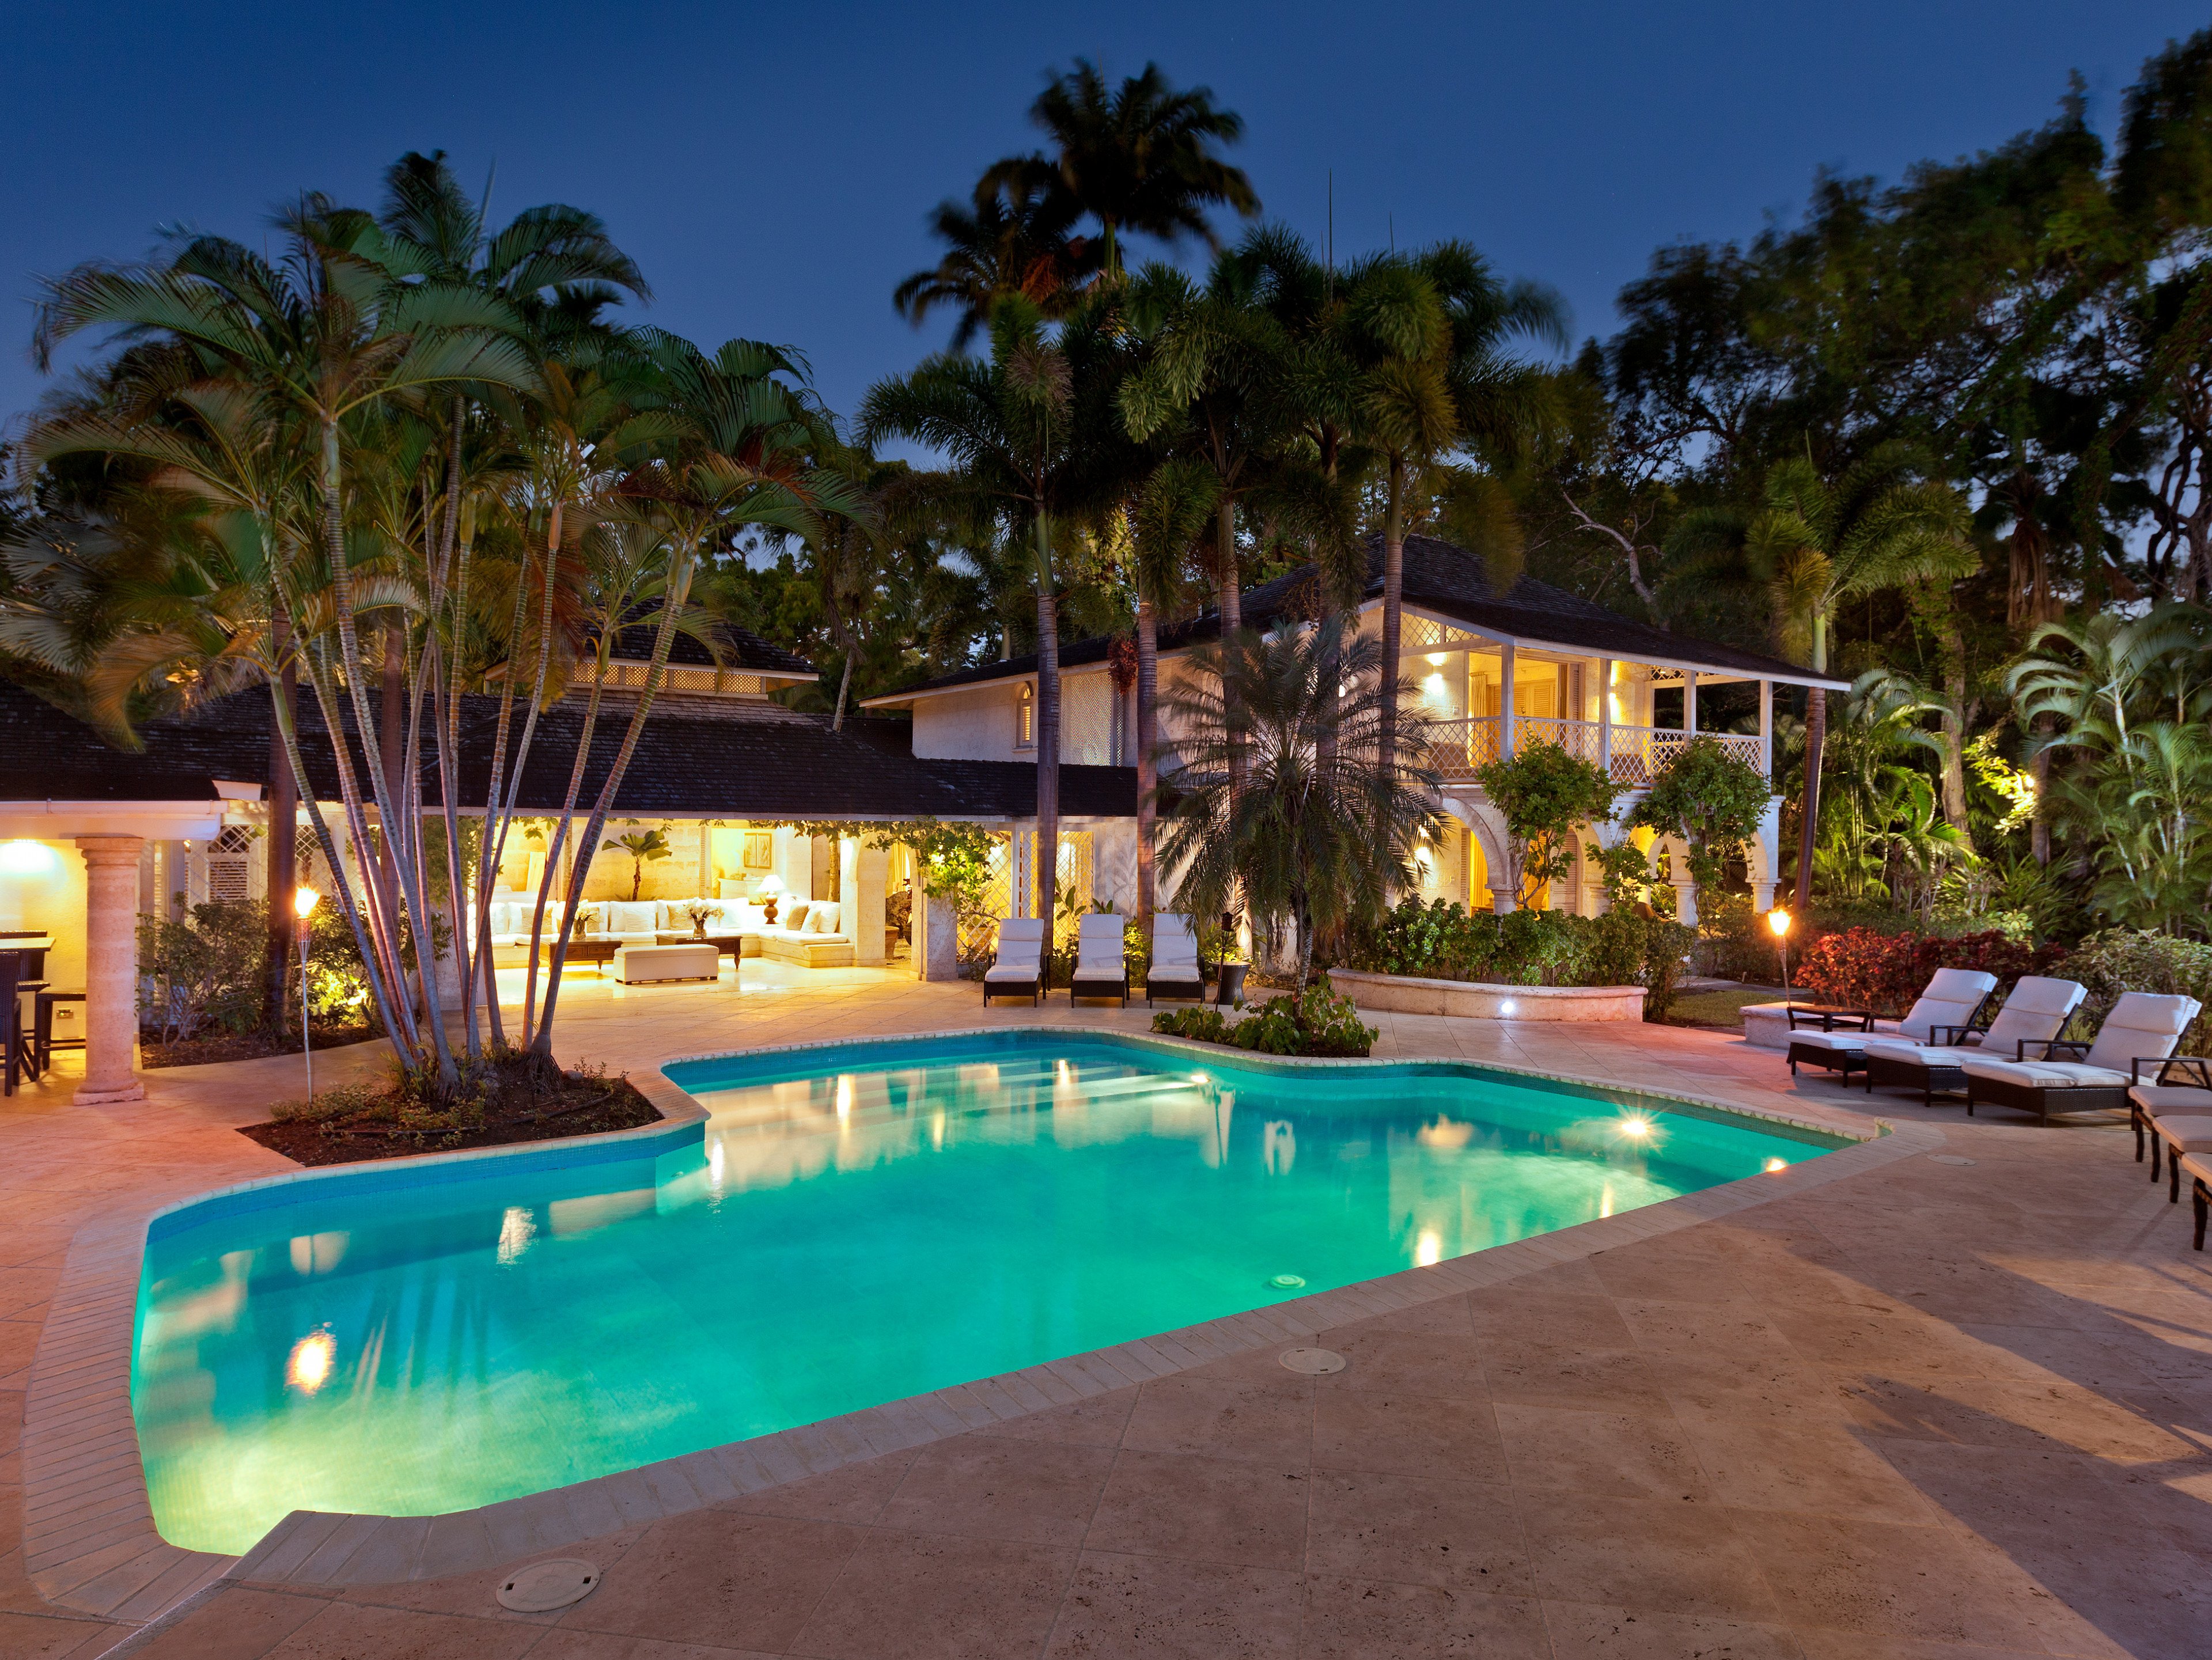 Bluff House Barbados villas with pools